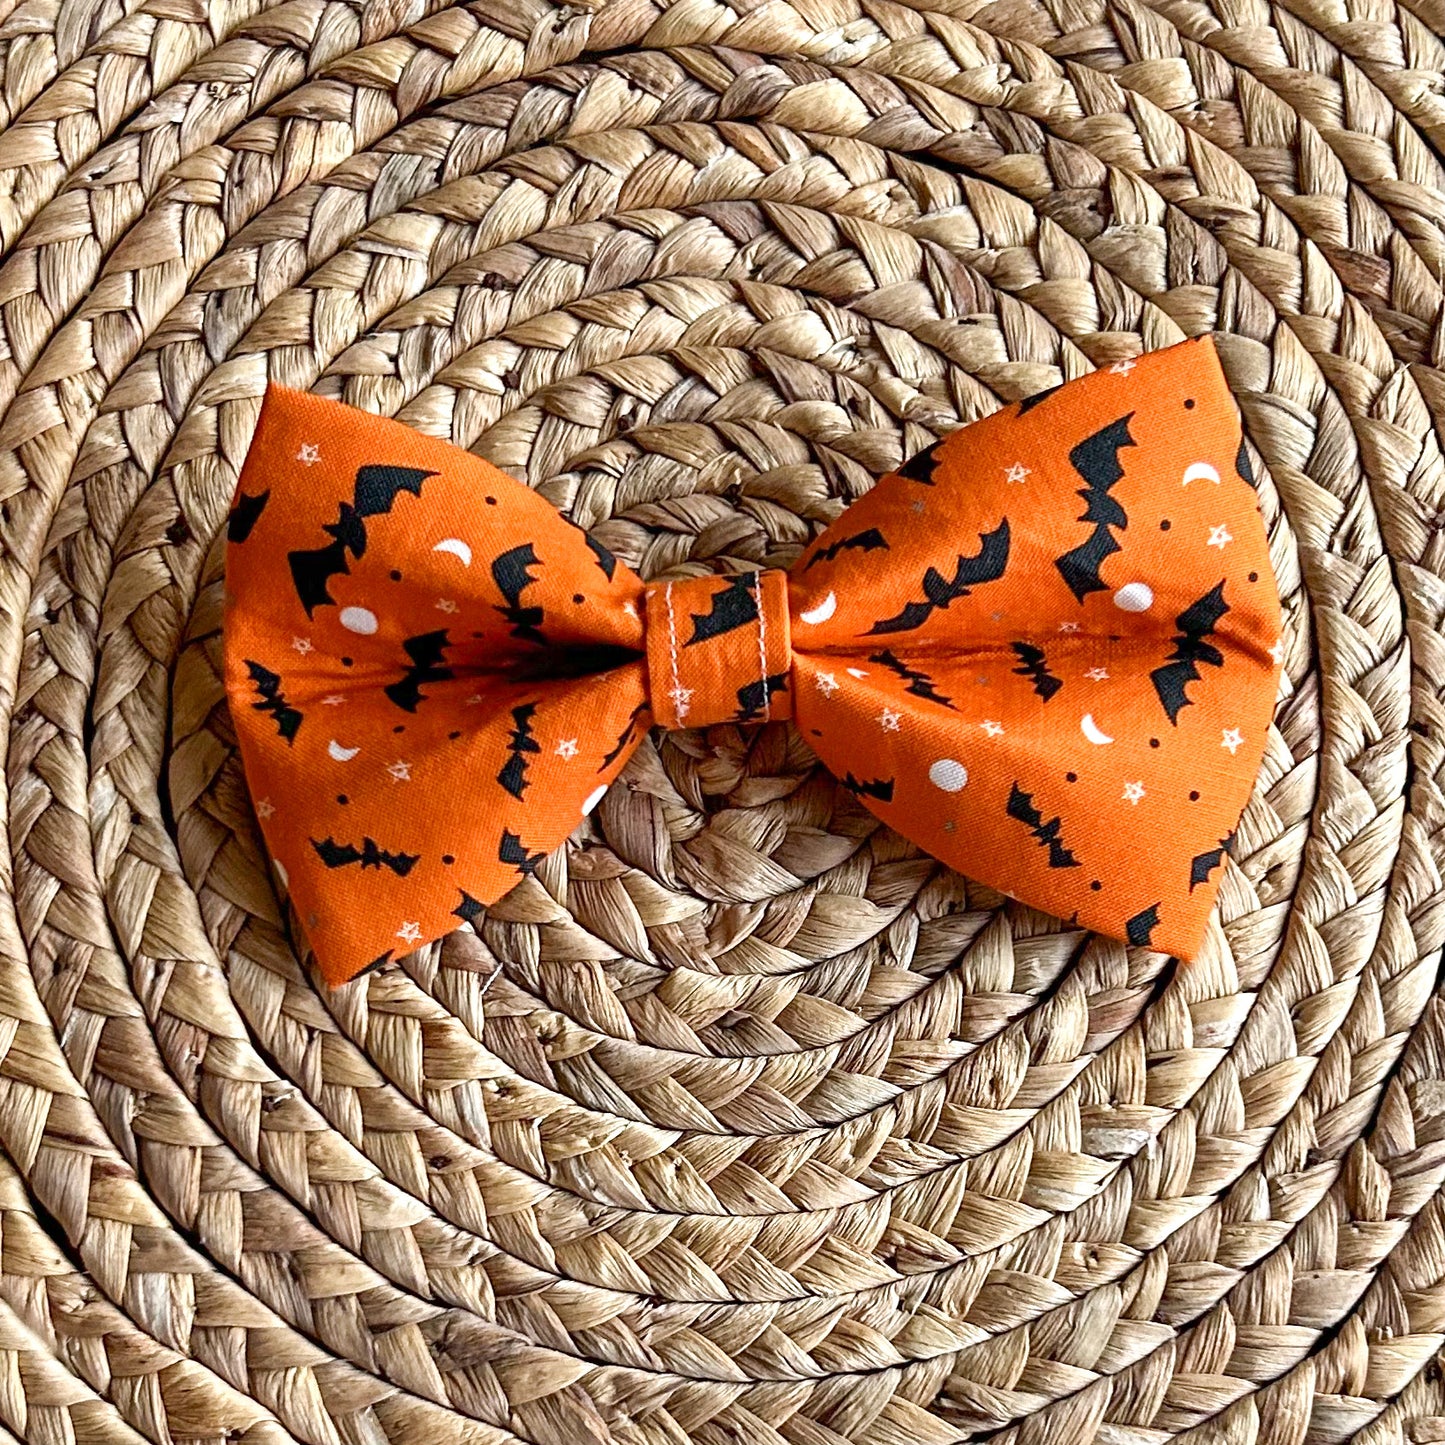 Bats on Orange Bow(tie)